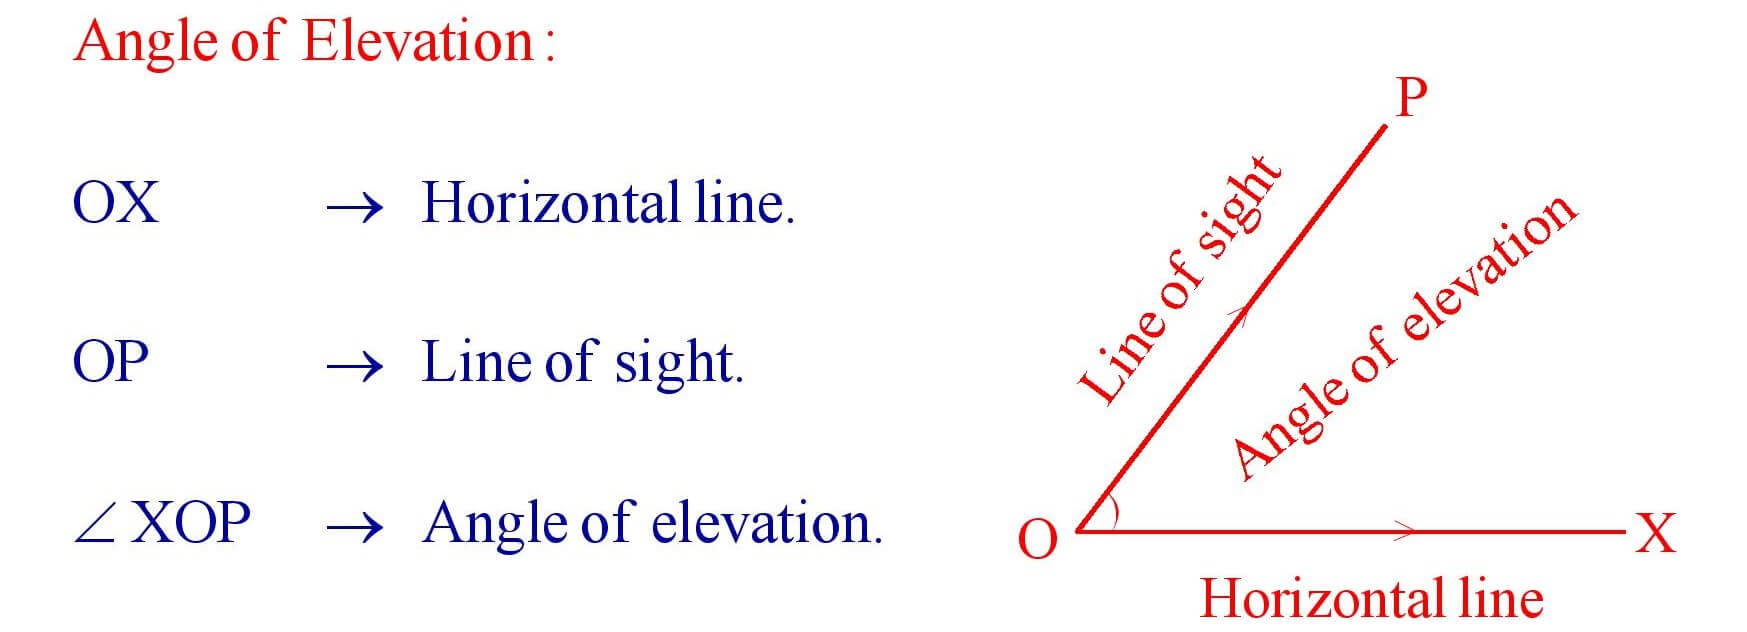 Angle of Elevation